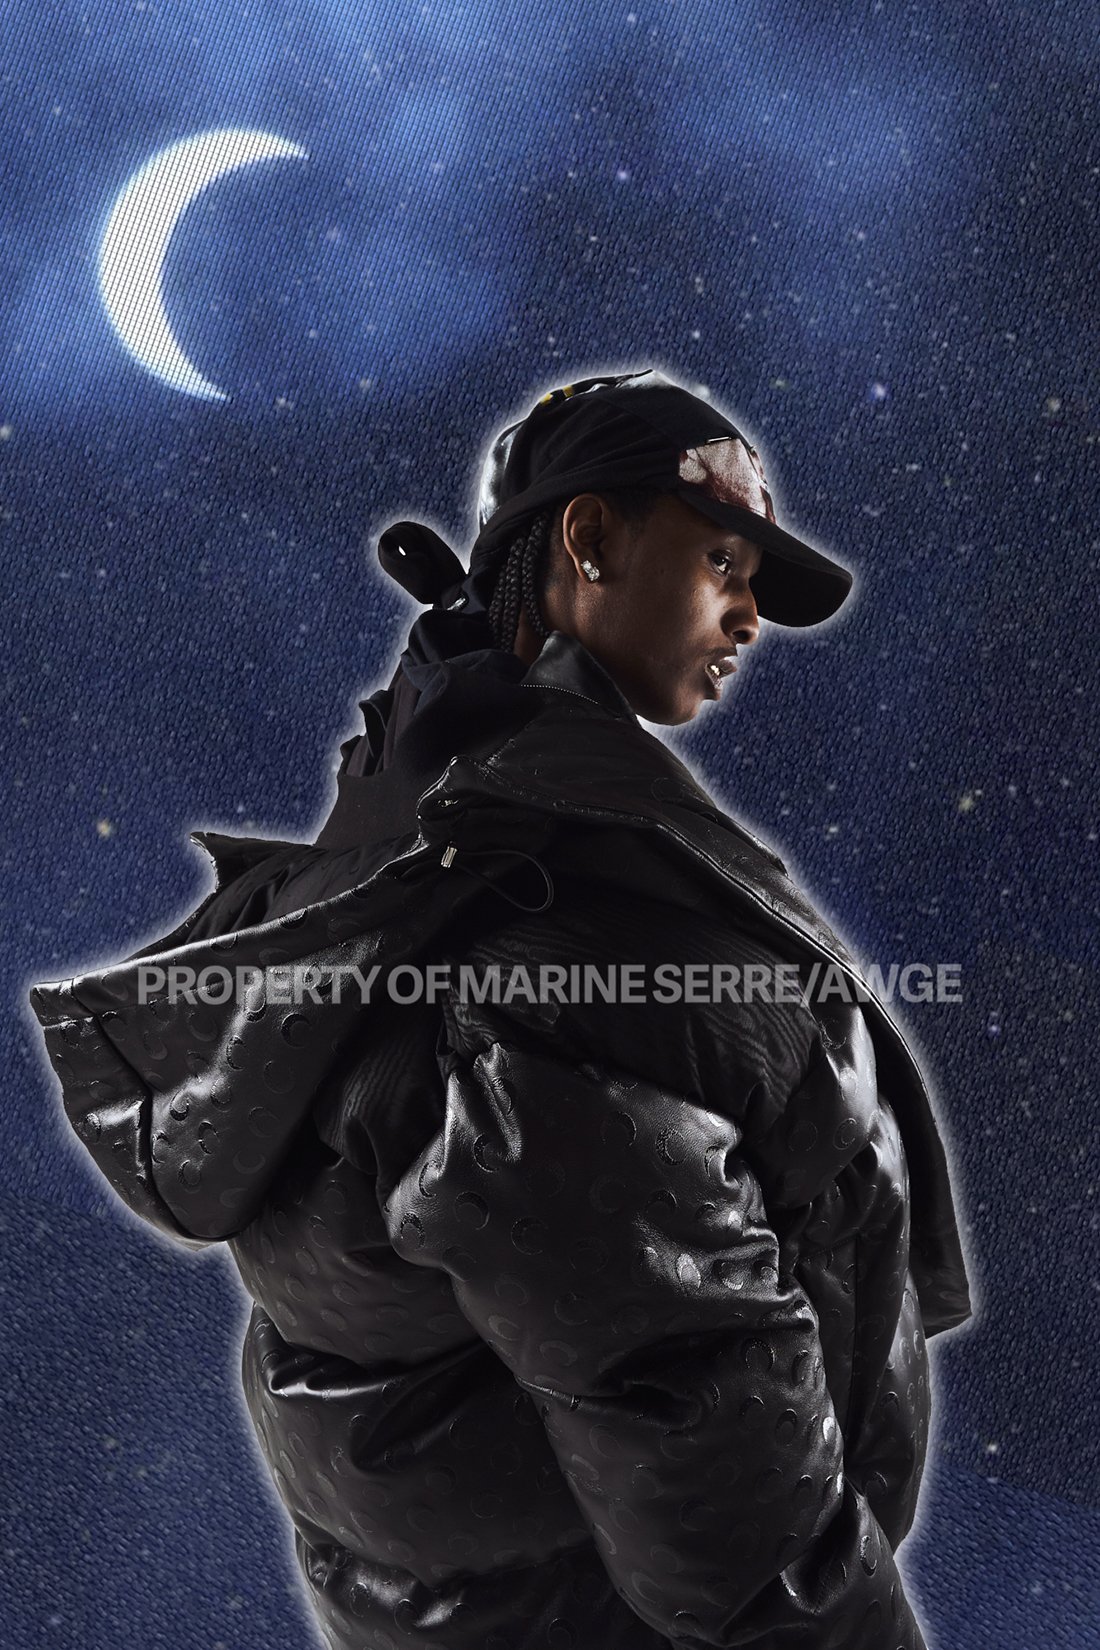 Marine Serre x AWGE A$AP Rocky